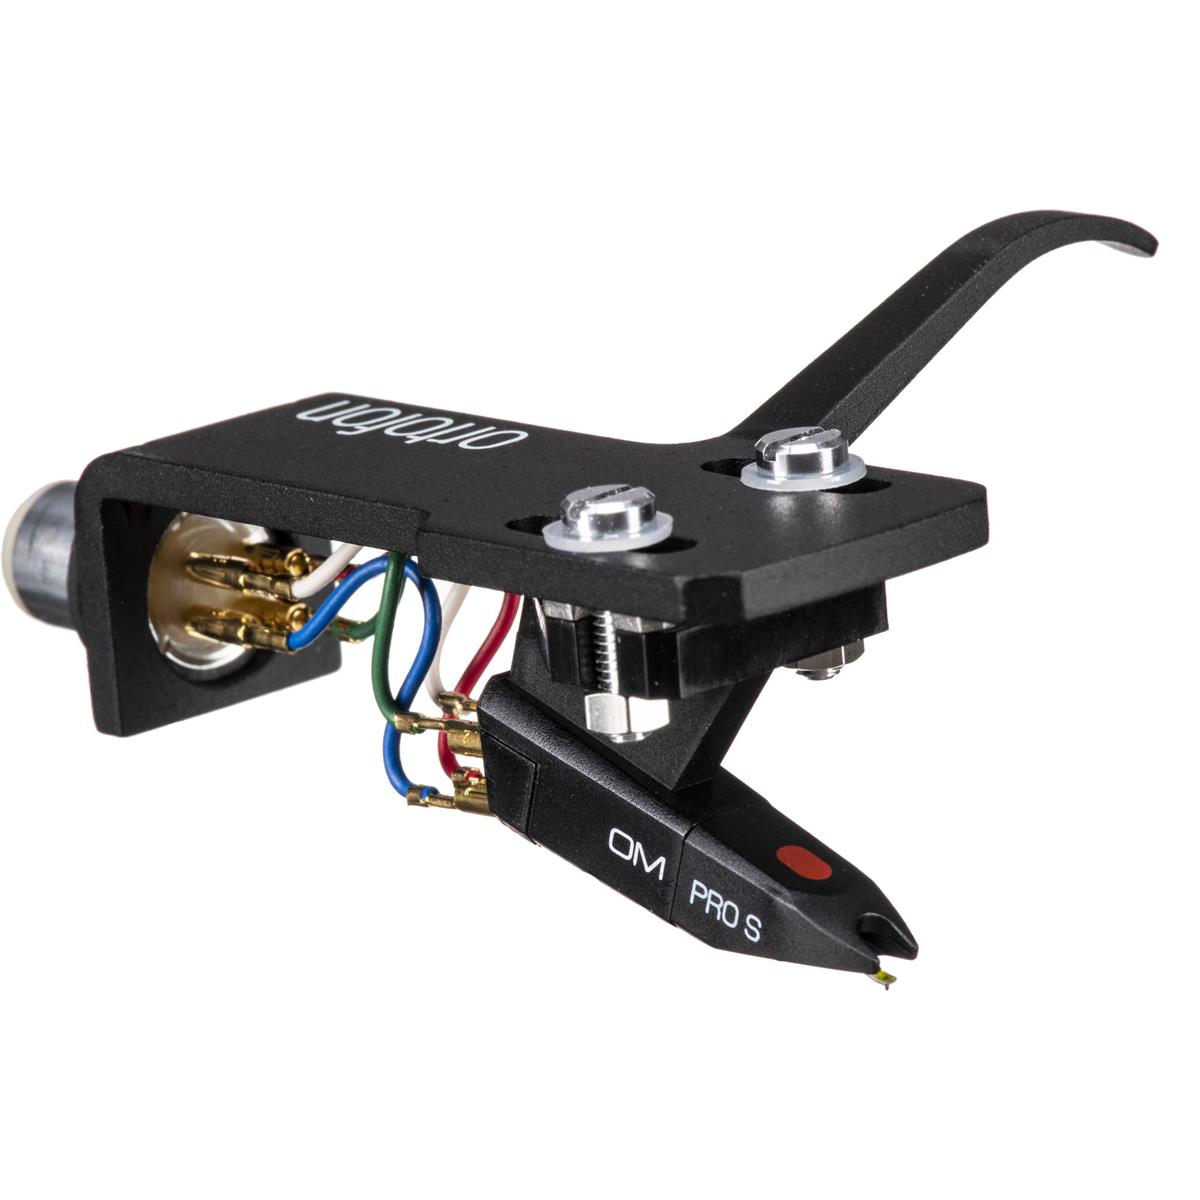 Image of Ortofon OM Pro S Cartridge with Stylus Pre-Mounted on SH-4 Black Headshell